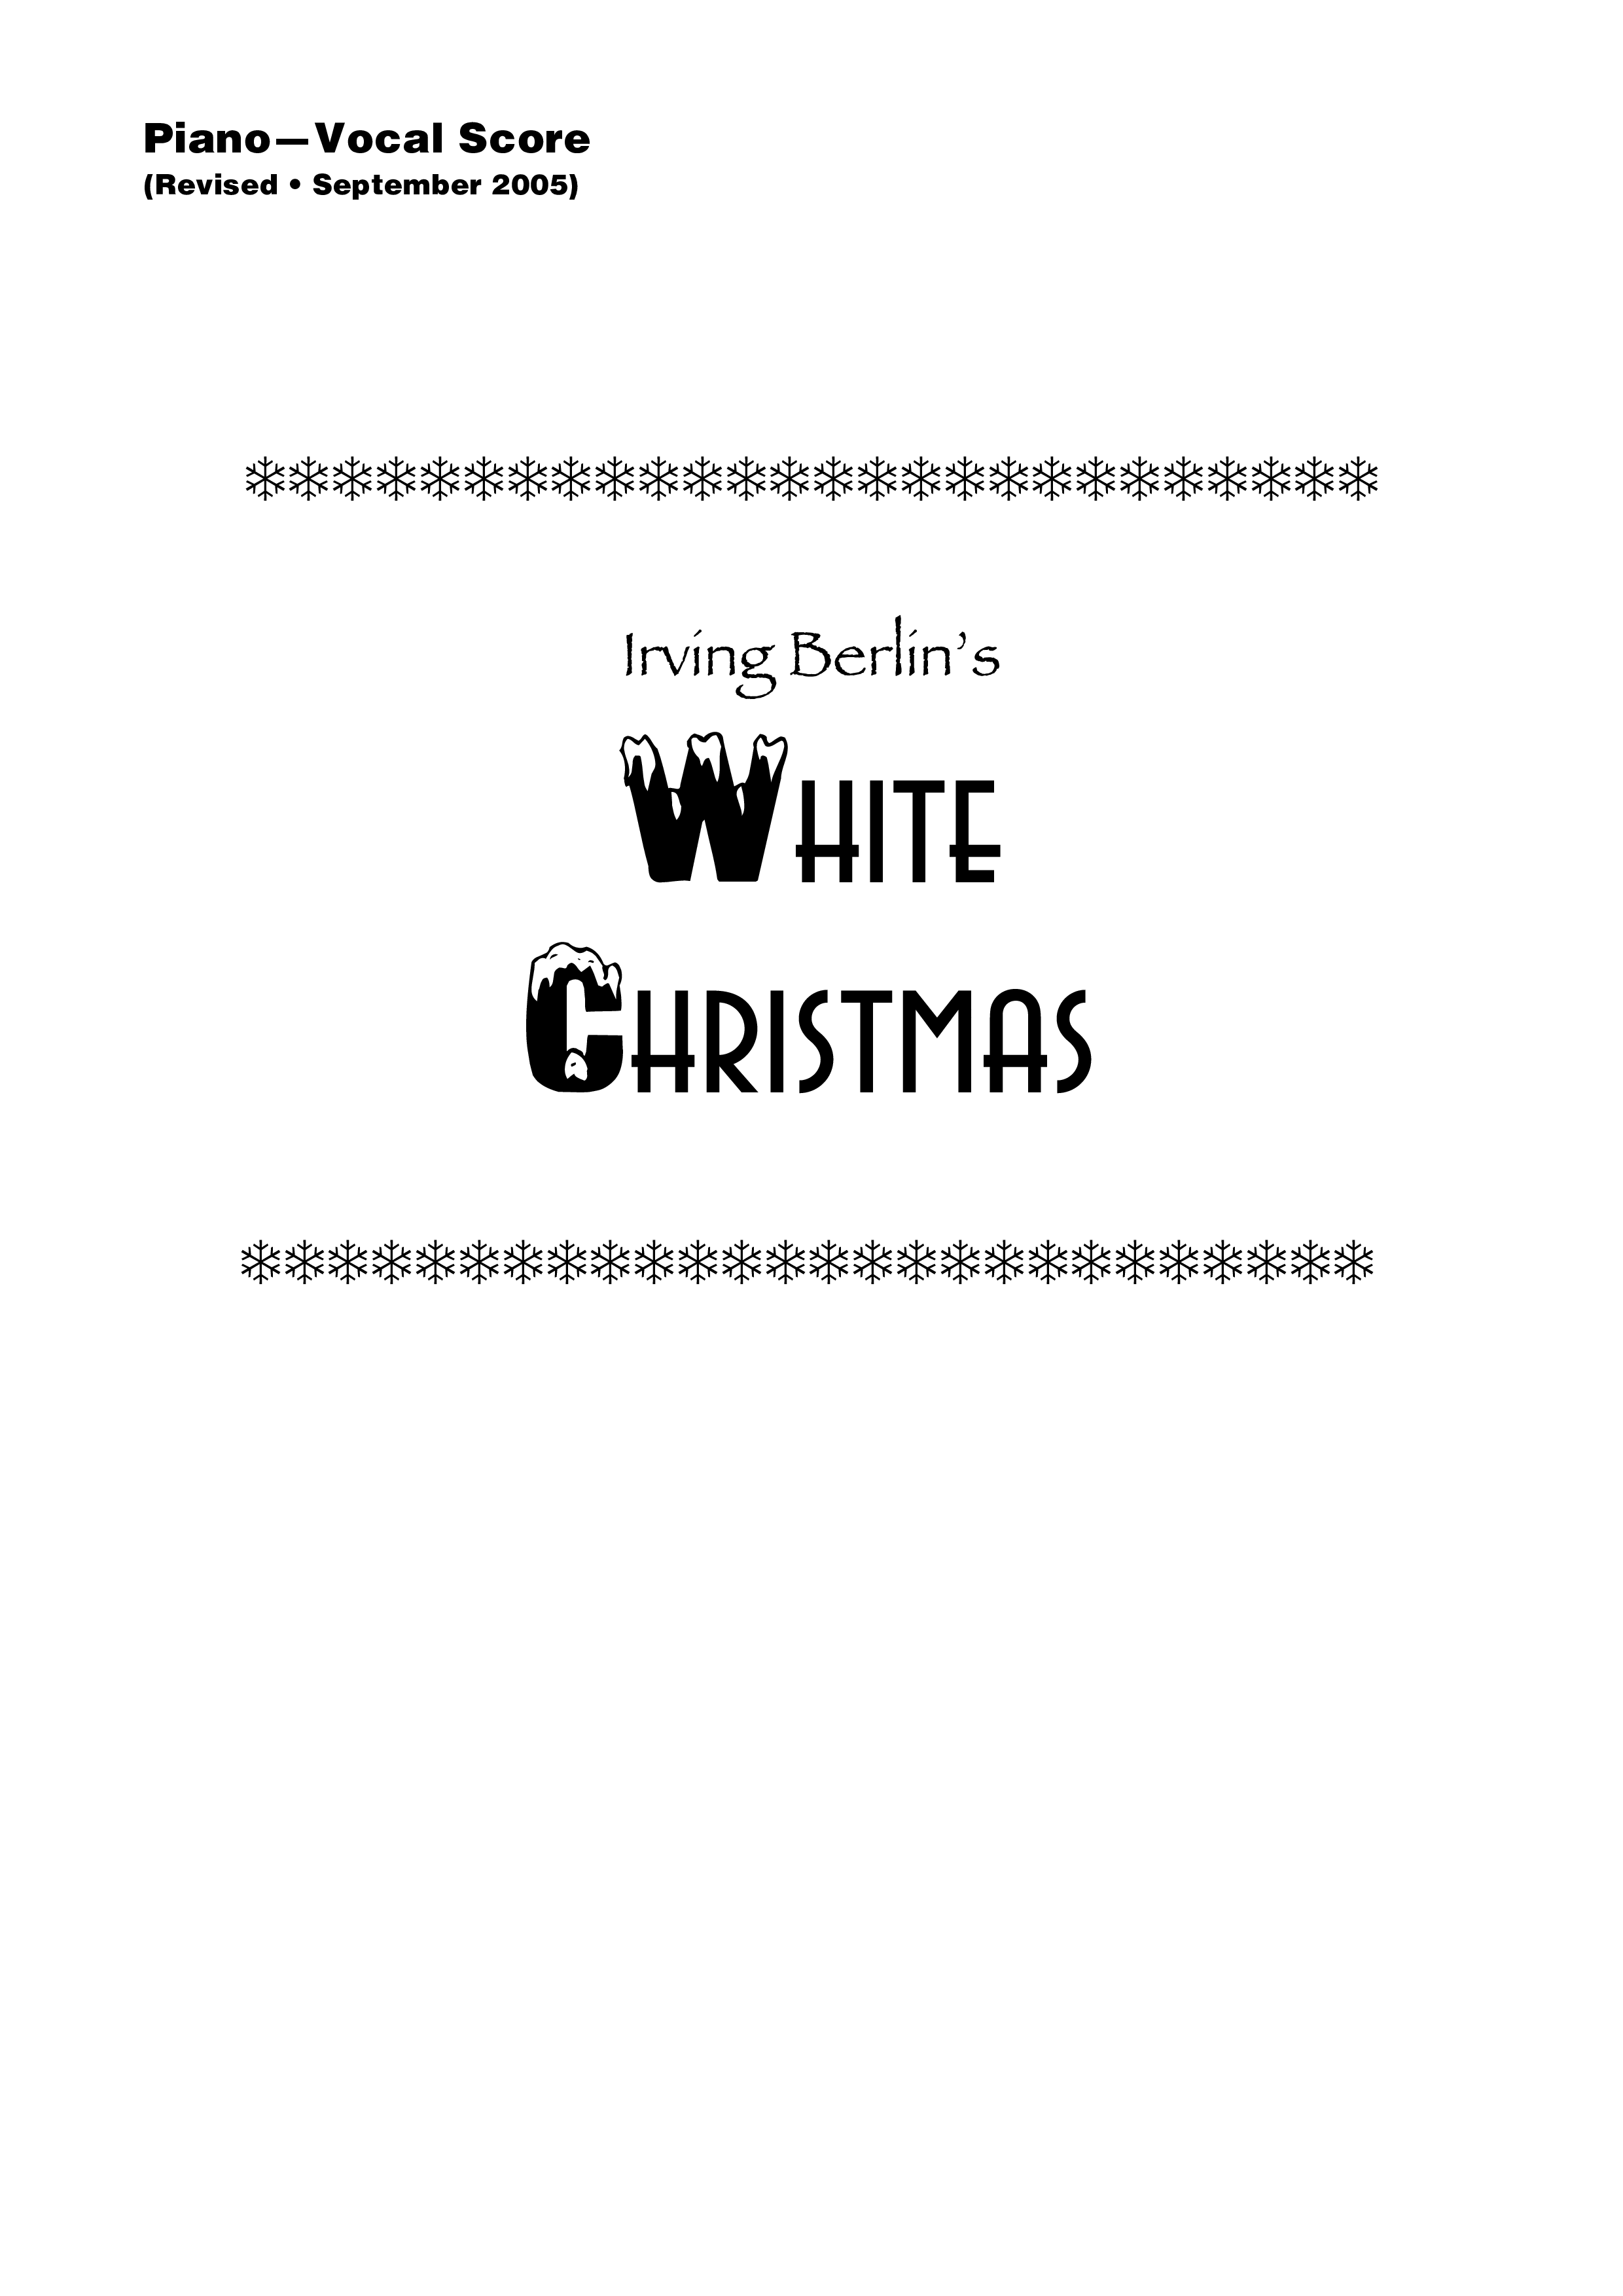 White Christmas Score